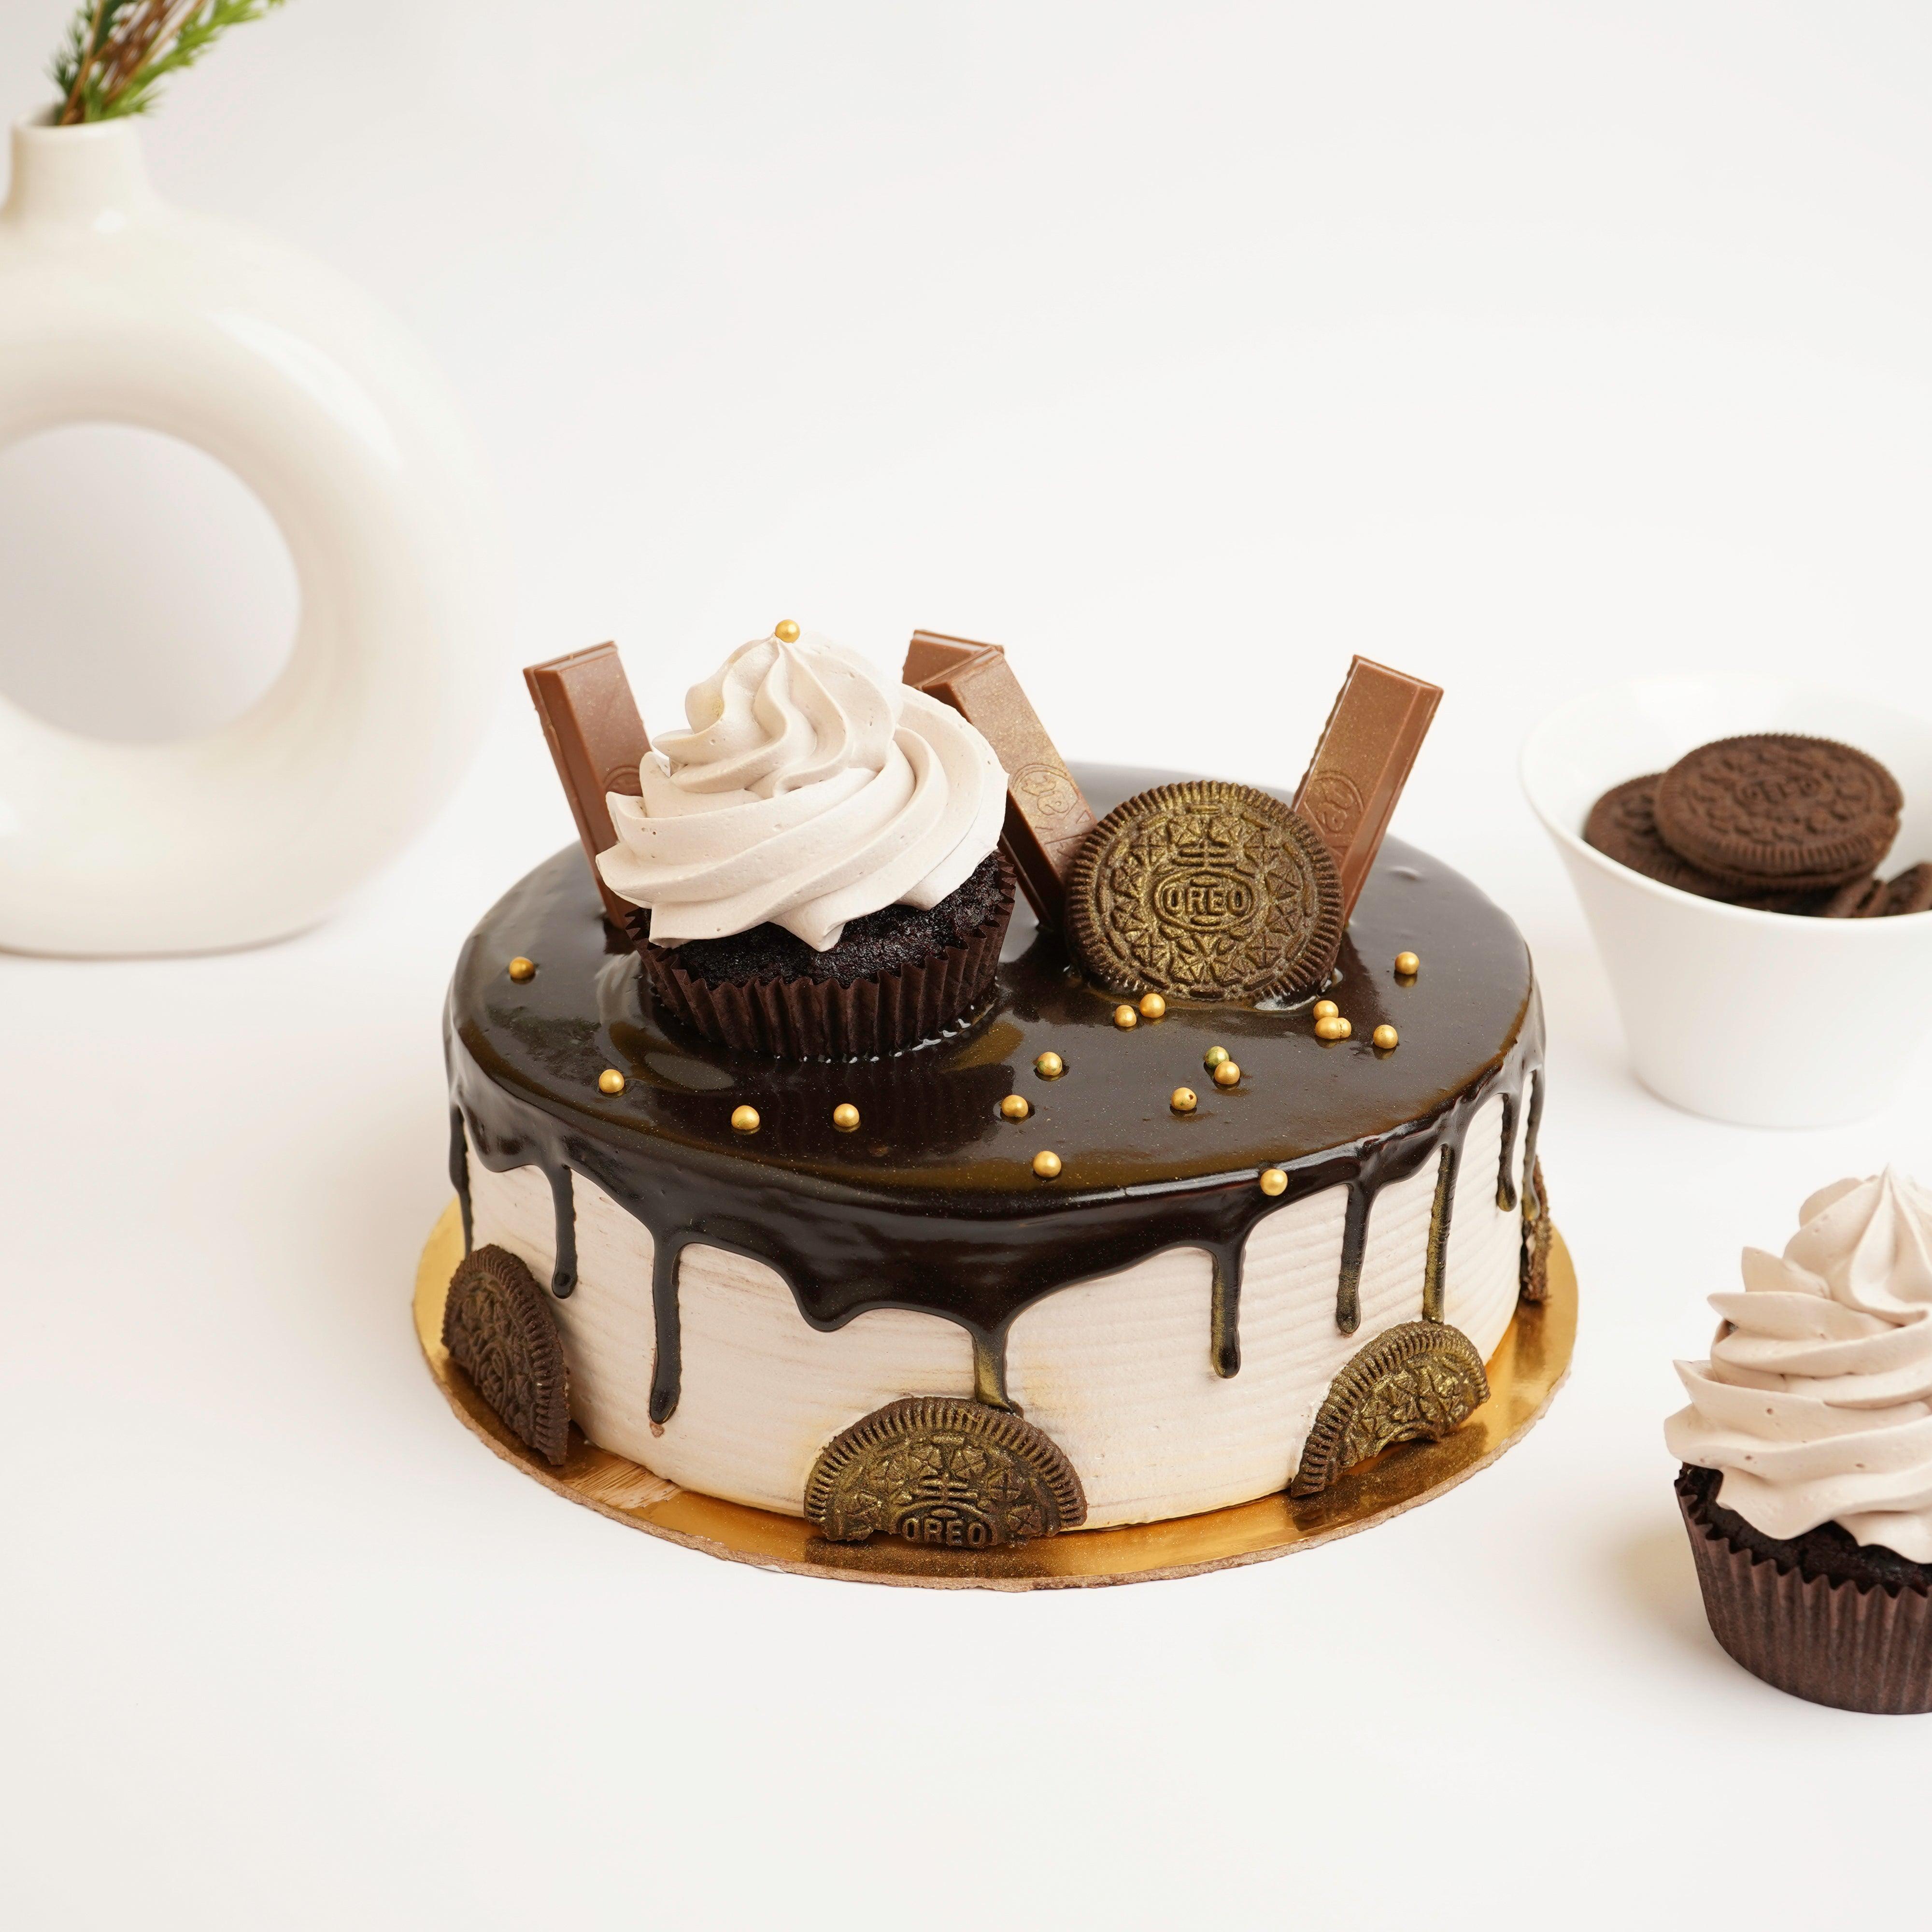 Overloaded Chocolate Yummy Cake | Winni.in